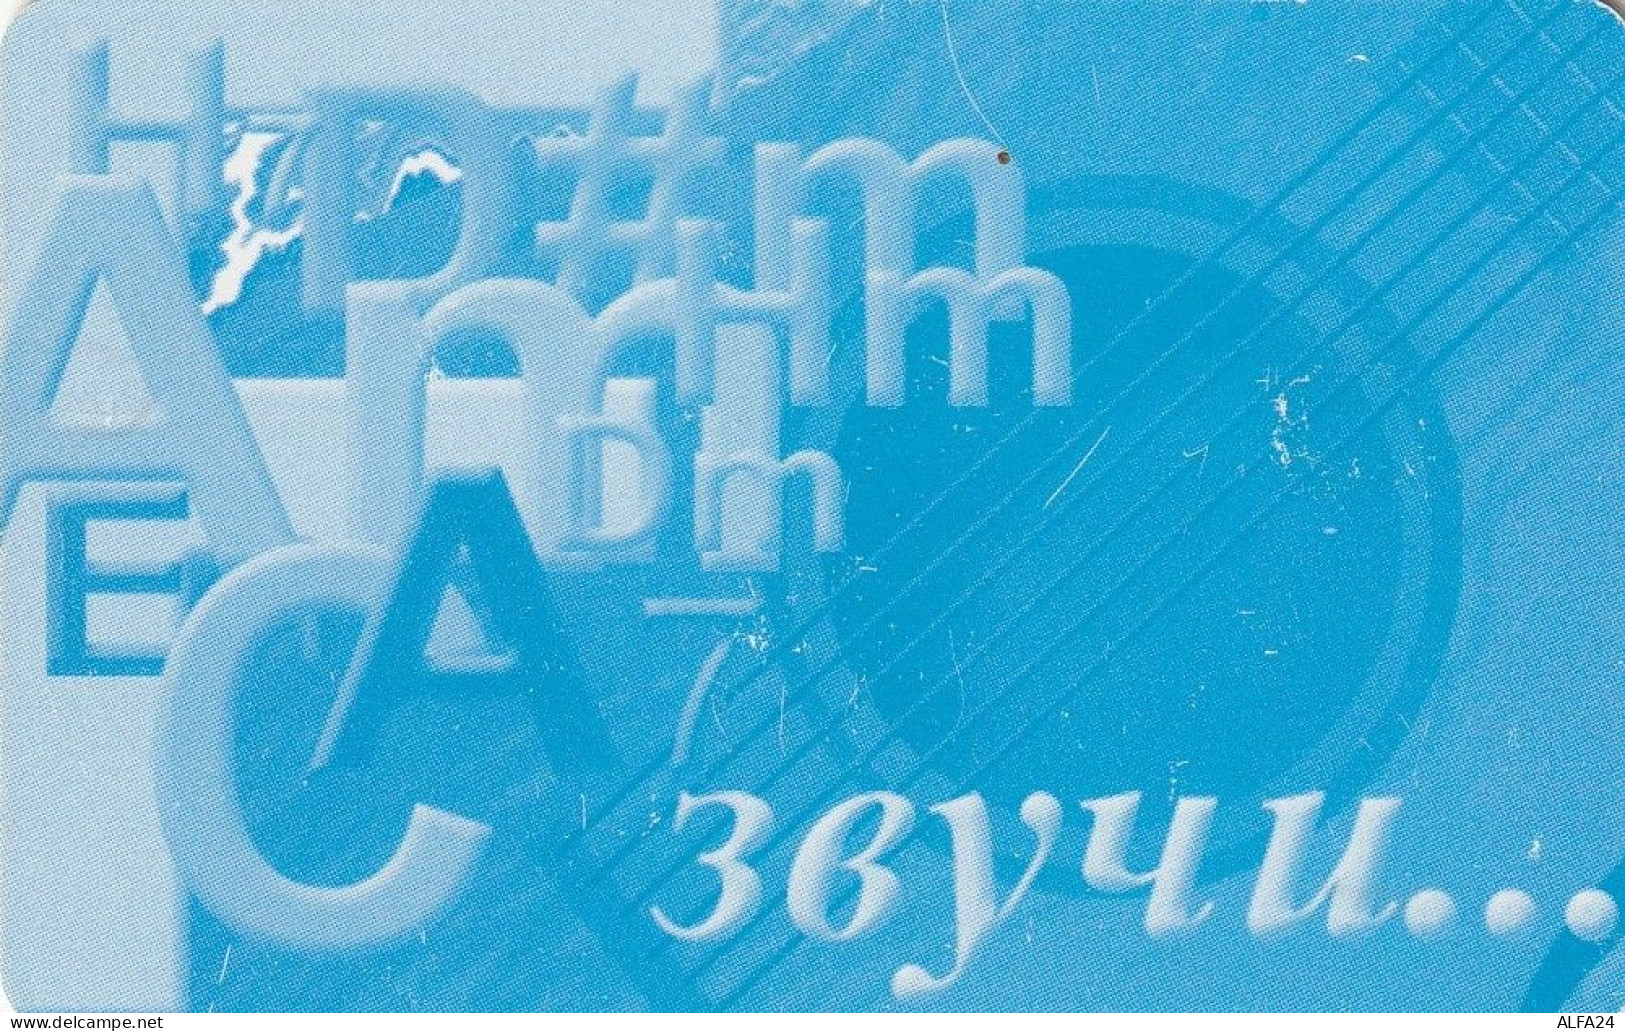 PHONE CARD RUSSIA Bashinformsvyaz - Ufa (E9.2.4 - Russia